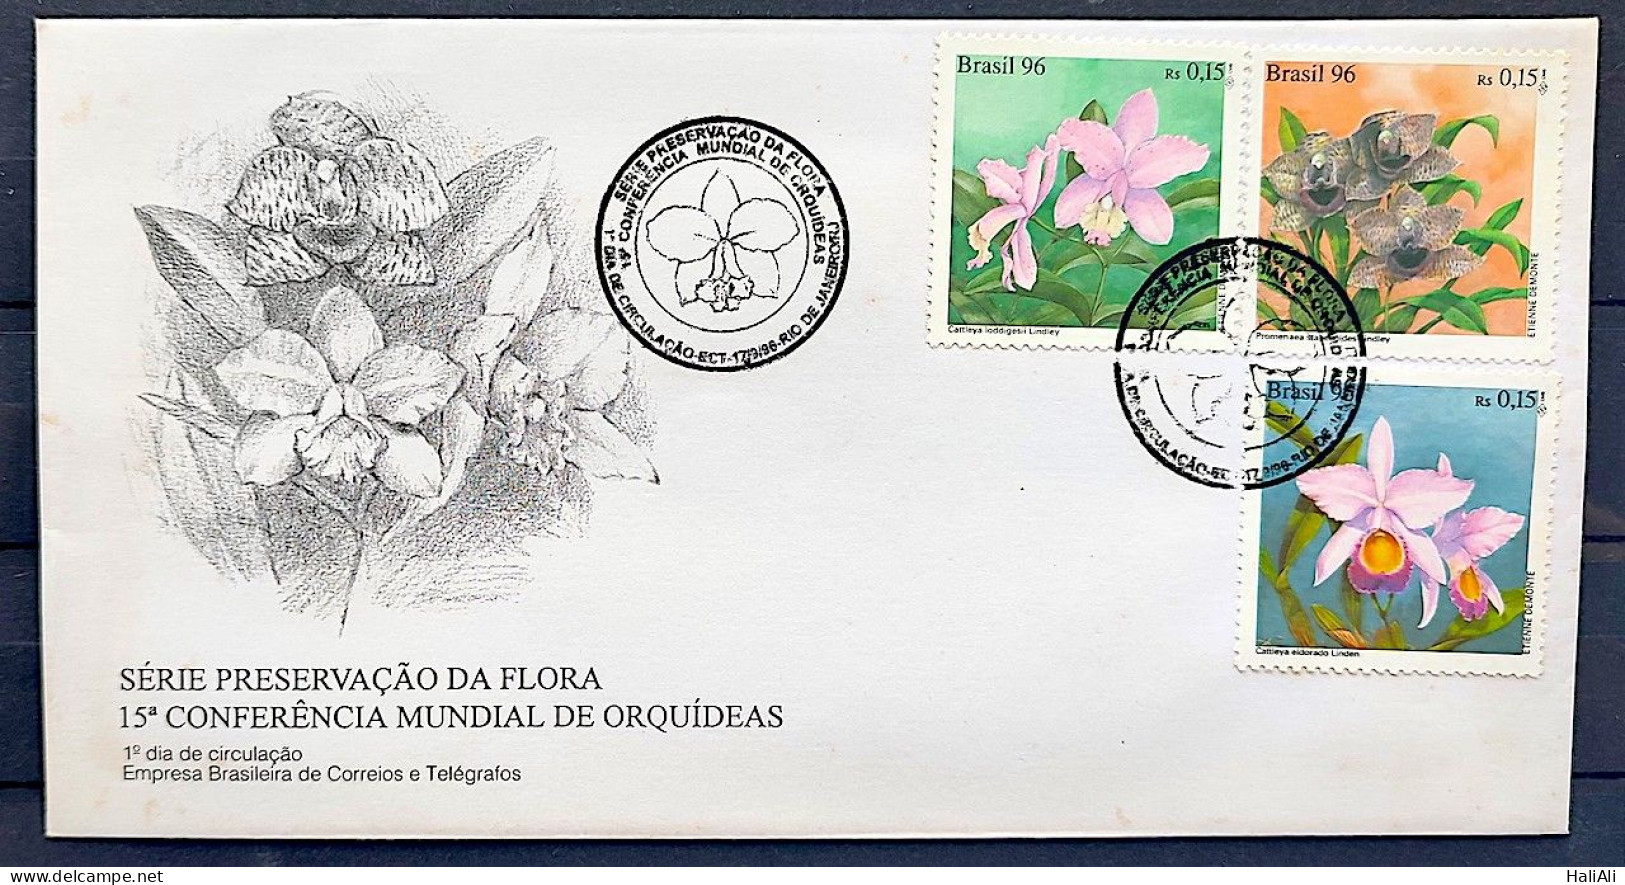 Brazil Envelope FDC 683 1 96 Orchids Flora CBC RJ - FDC